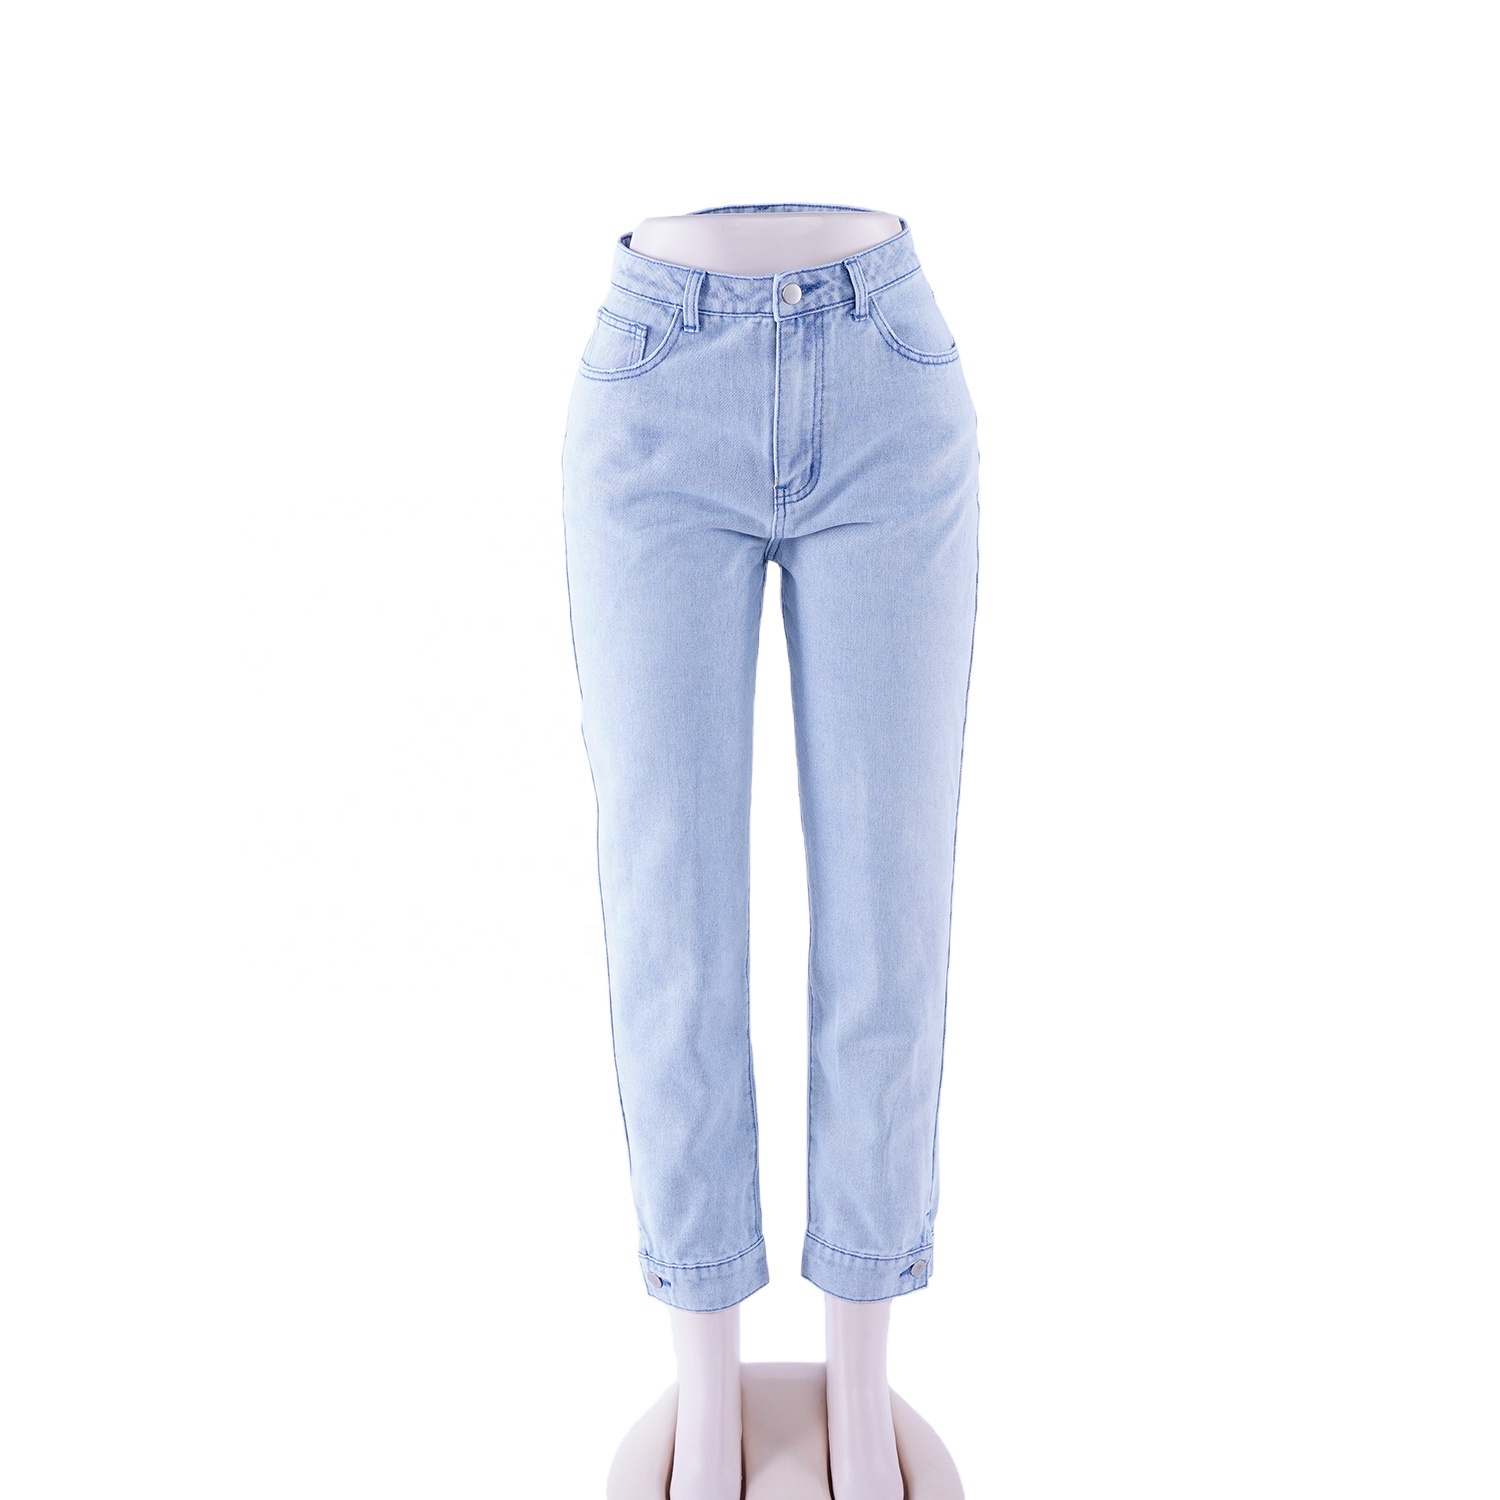 SKYKINGDOM new wholesale women jeans mid waist light blue denim jeans button leg jeans for women